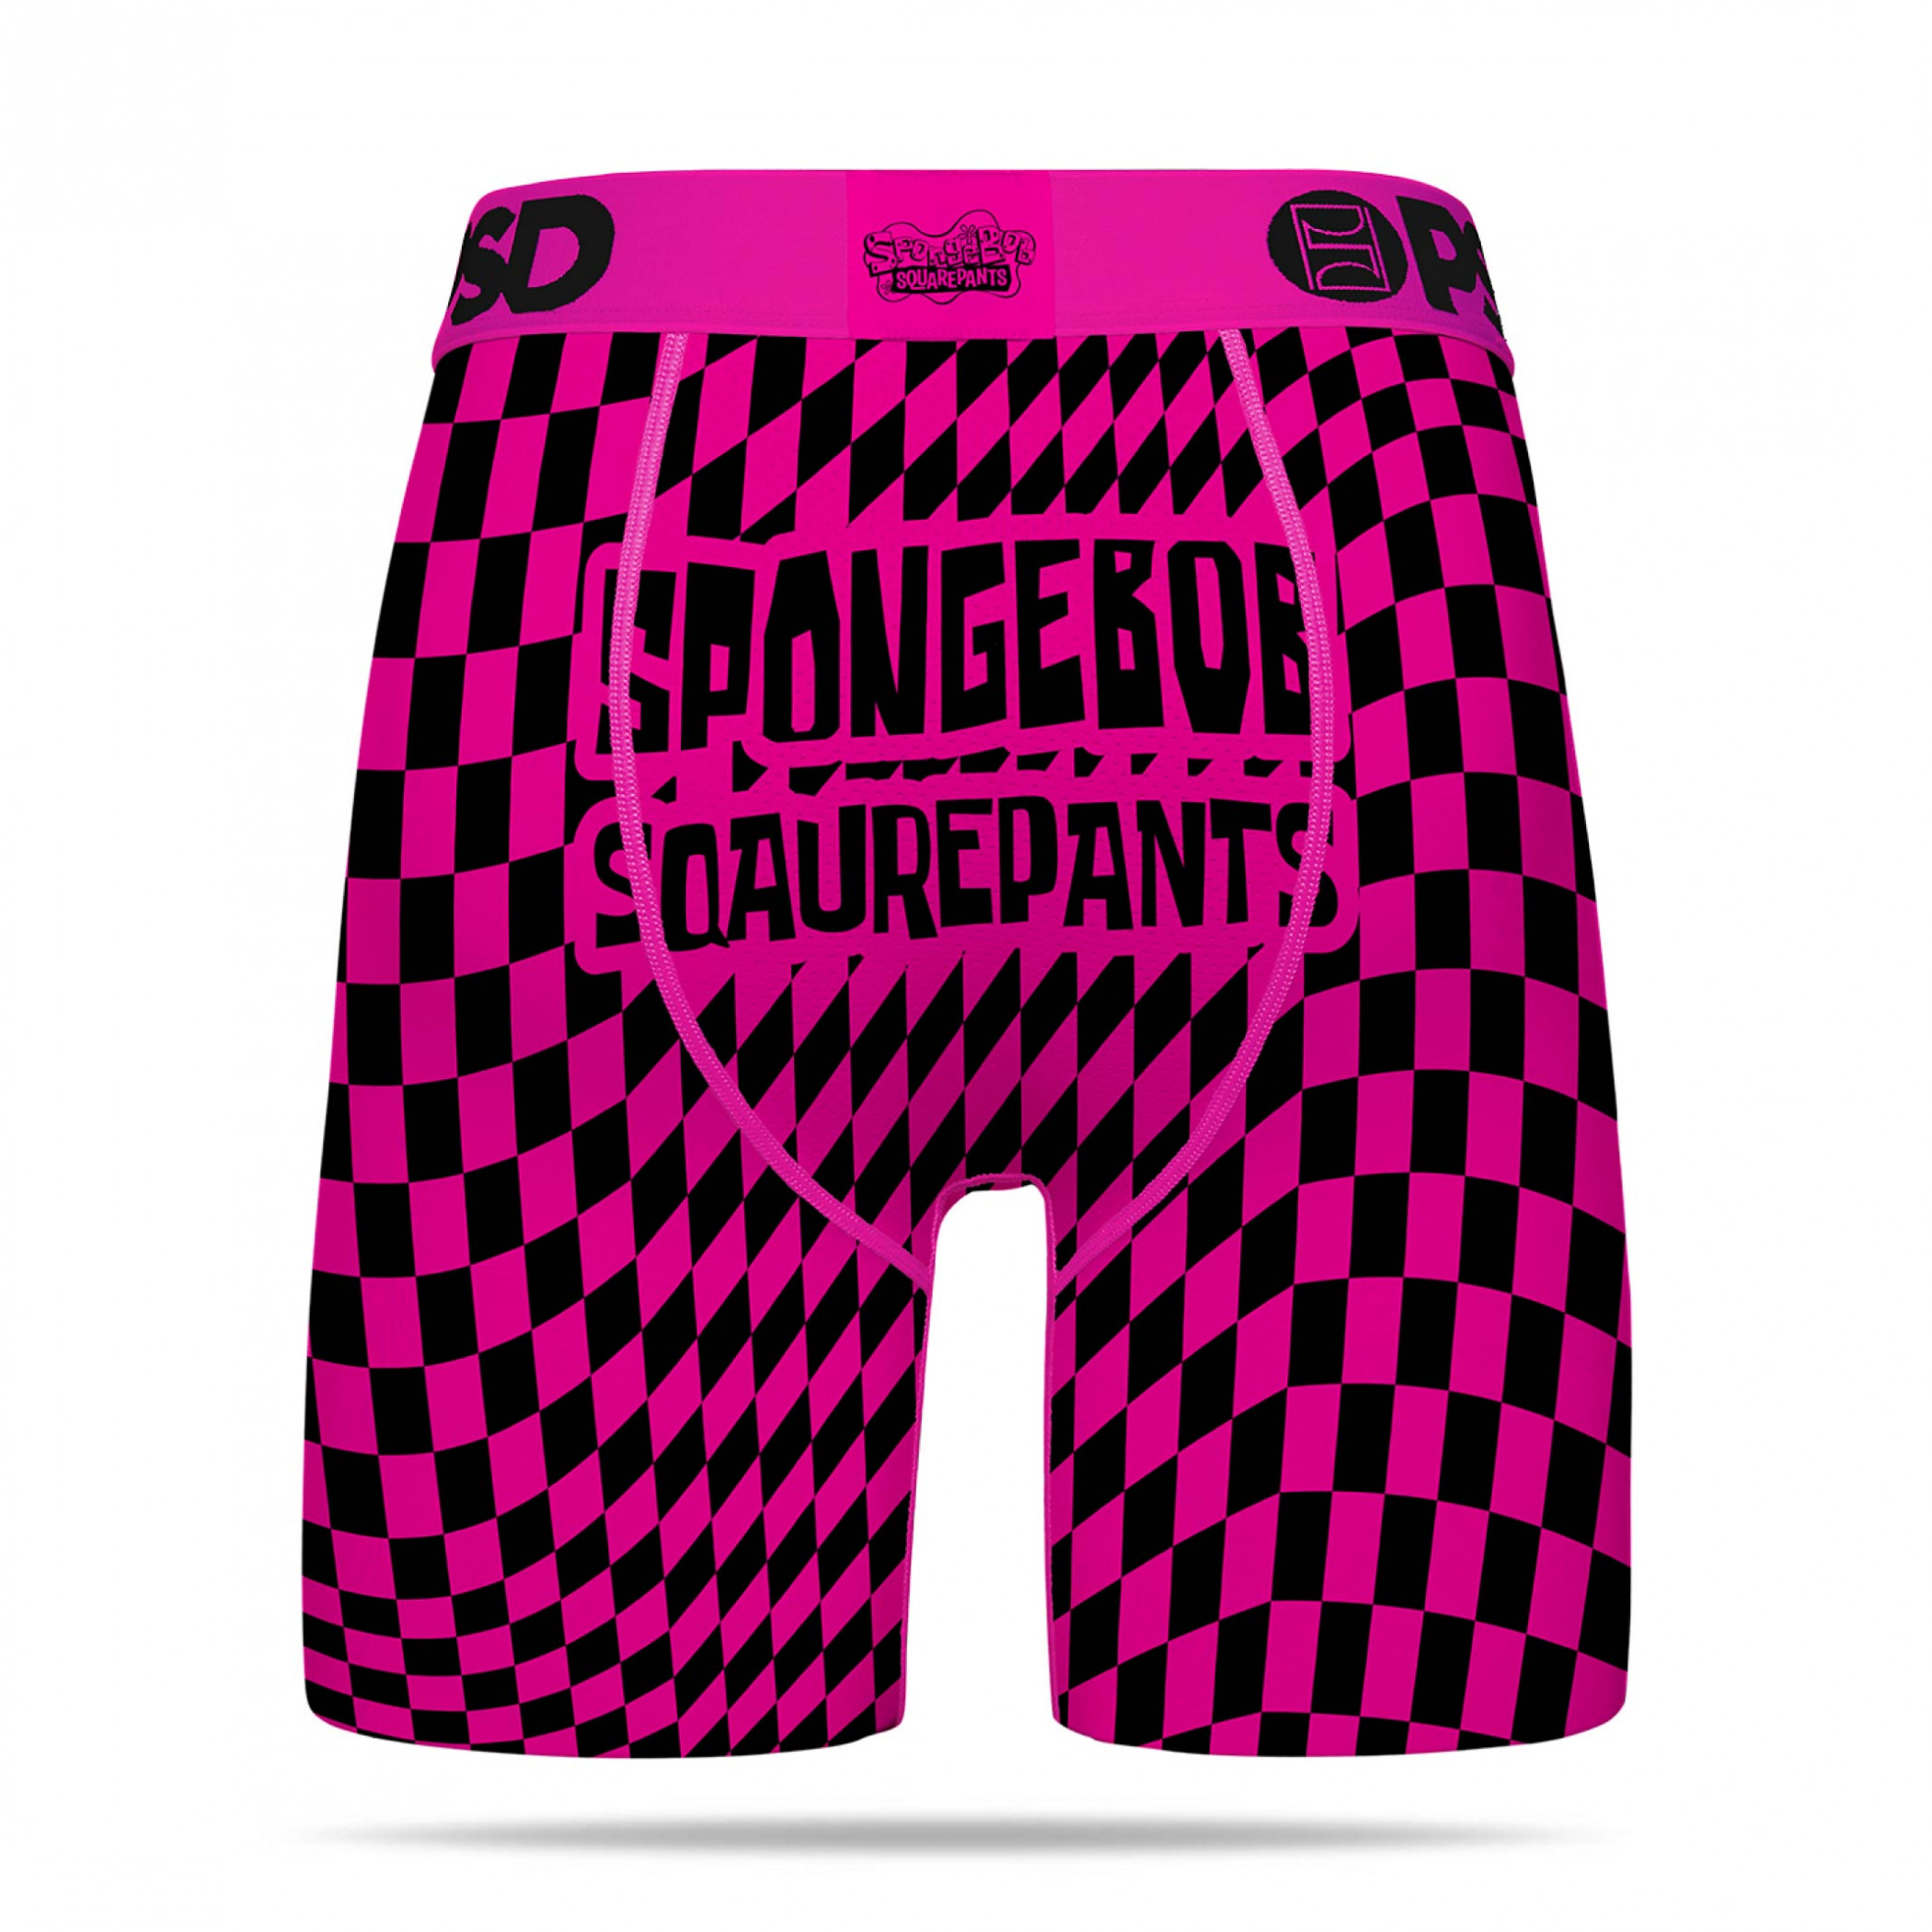 PSD SpongeBob SquarePants Patrick Plankton Krabs Underwear Boxer Brief  22218001X